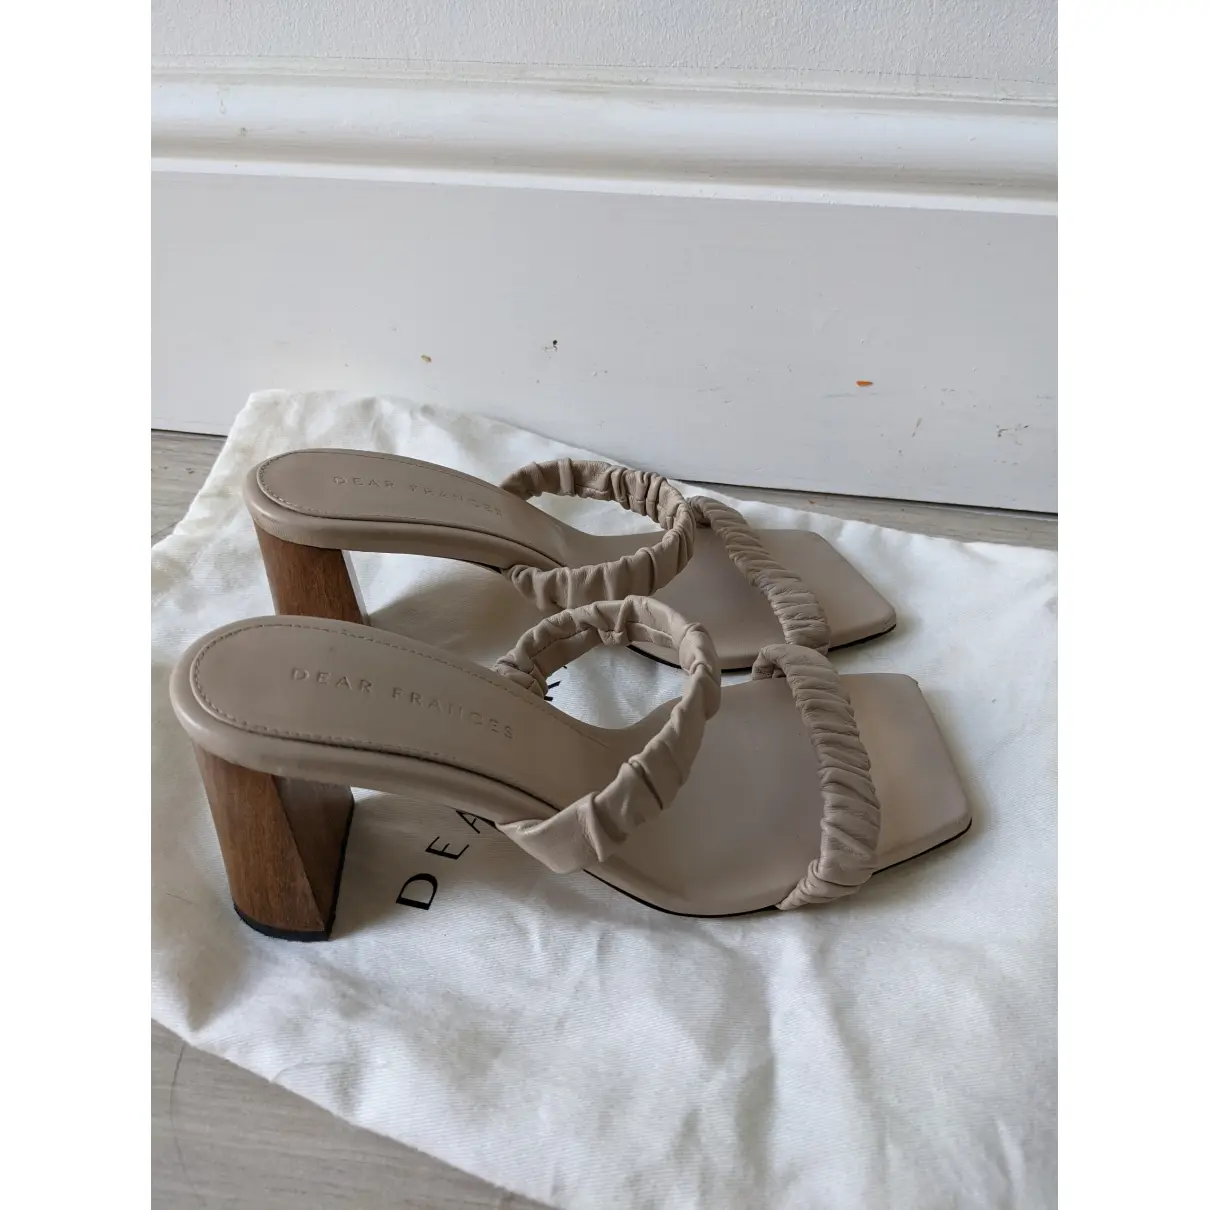 Buy Dear Frances Leather sandals online